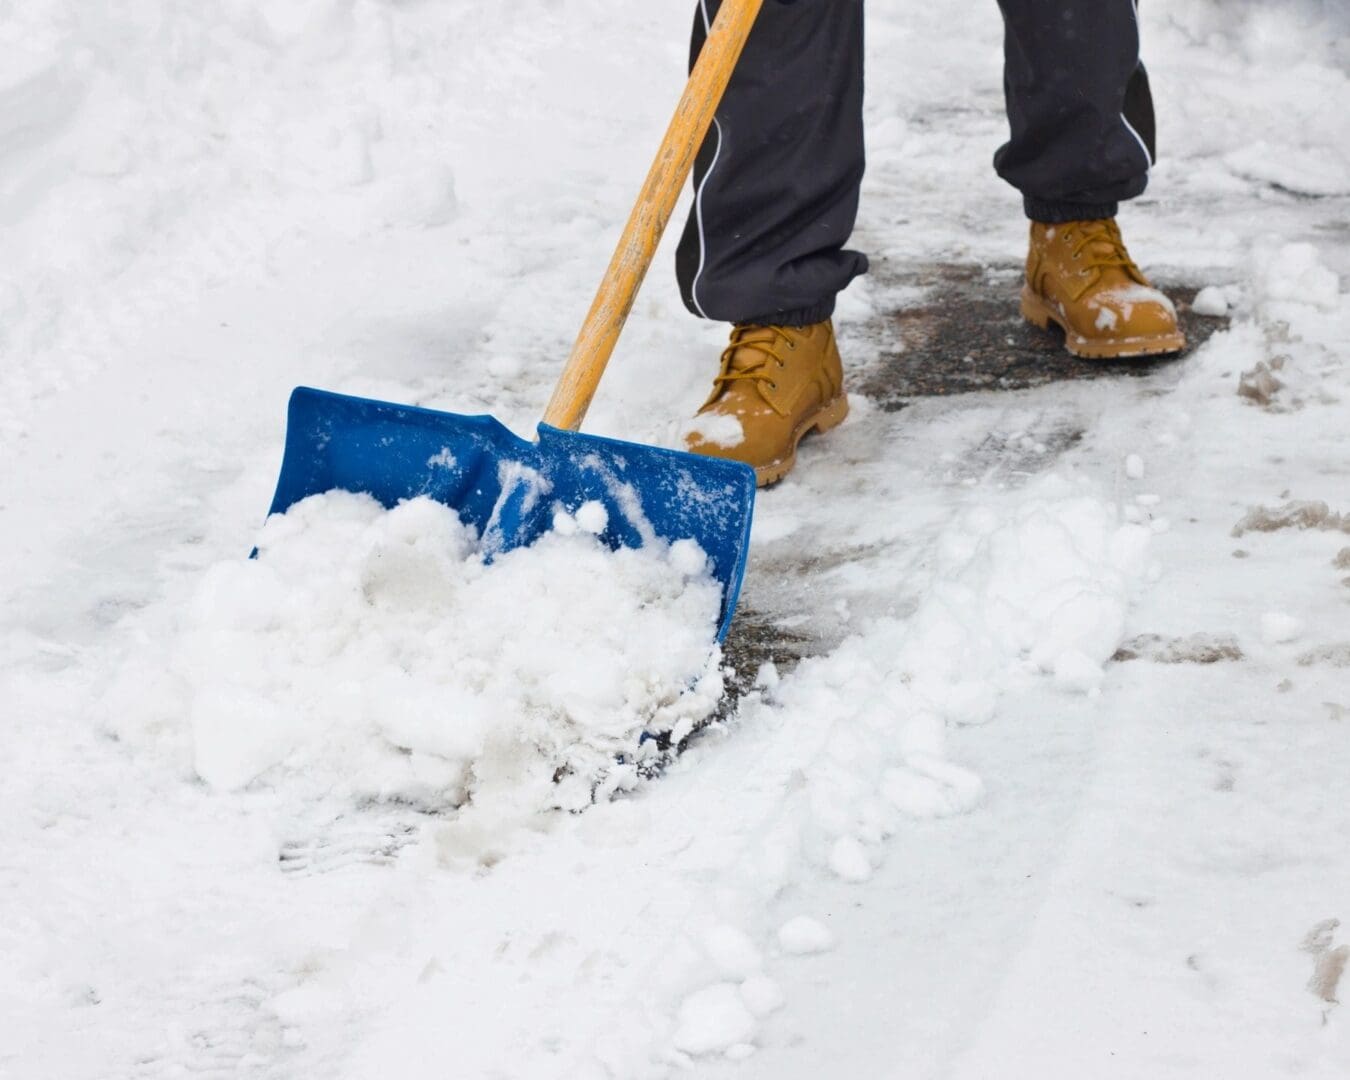 A person shoveling snow with a blue shovel.